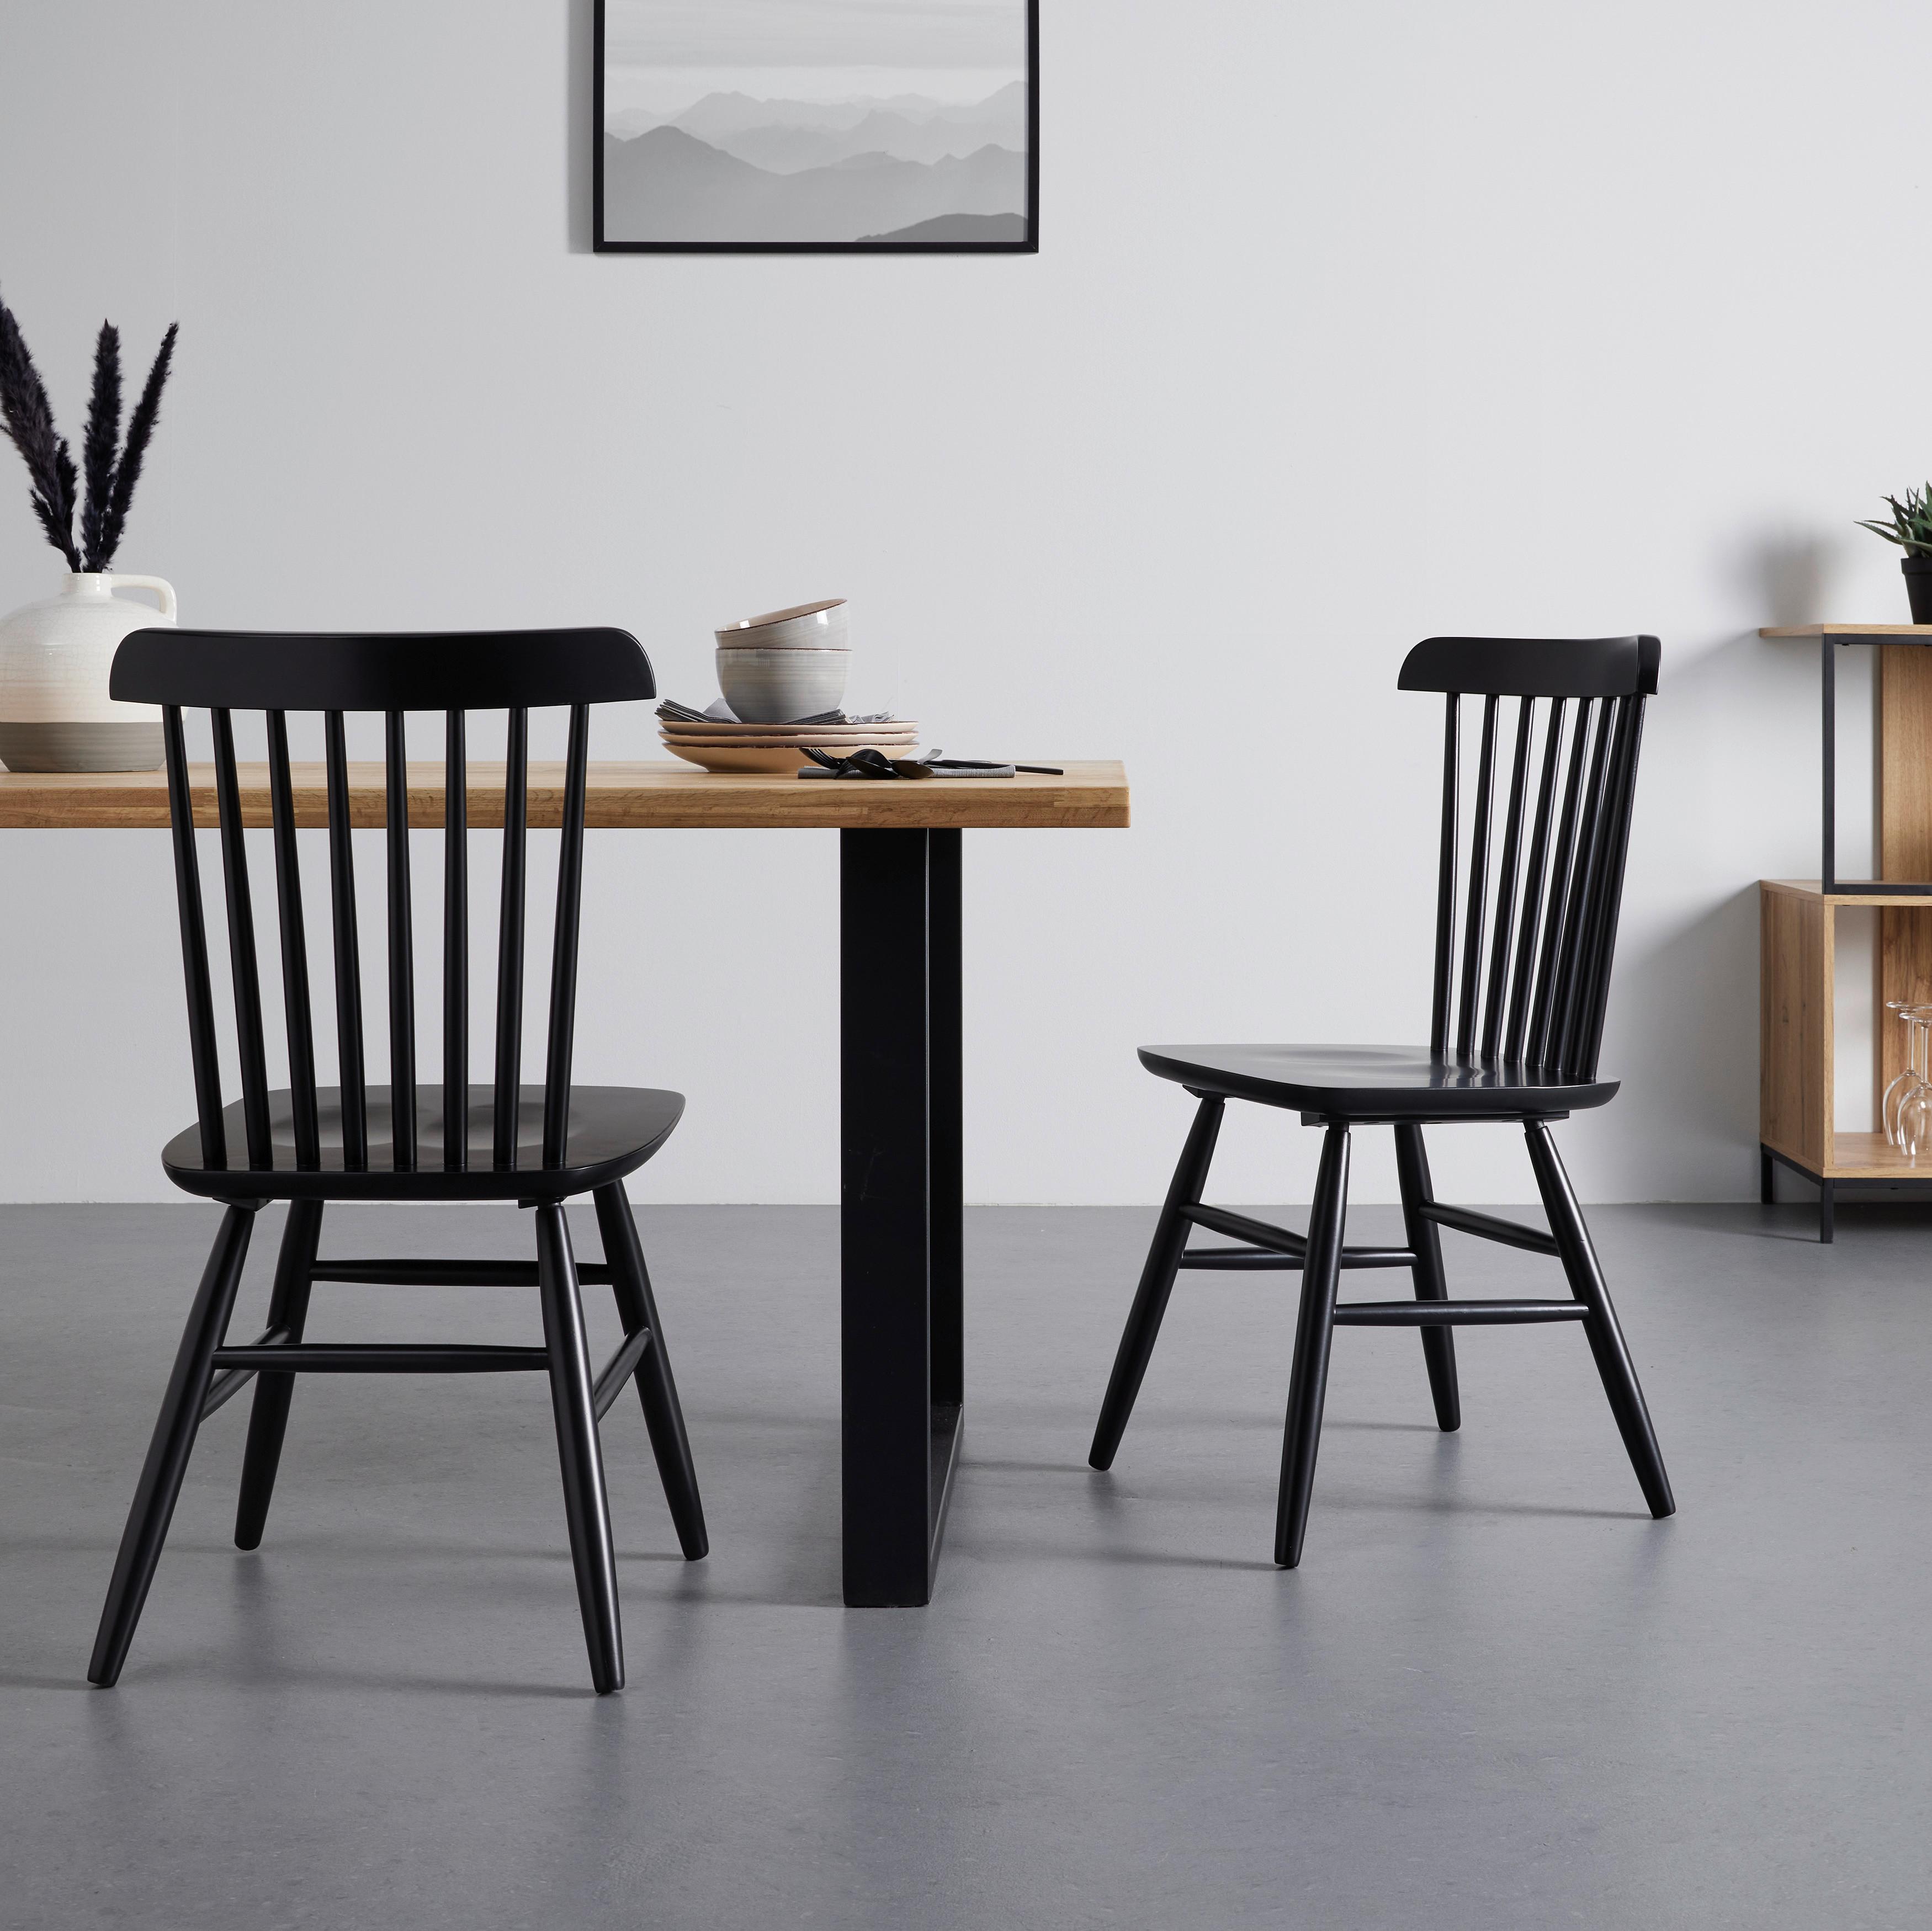 Stuhl-Set "Pedro", 2-er Set, schwarz, aus Buche, massiv - Schwarz, MODERN, Holz (48/89/52cm) - Bessagi Home